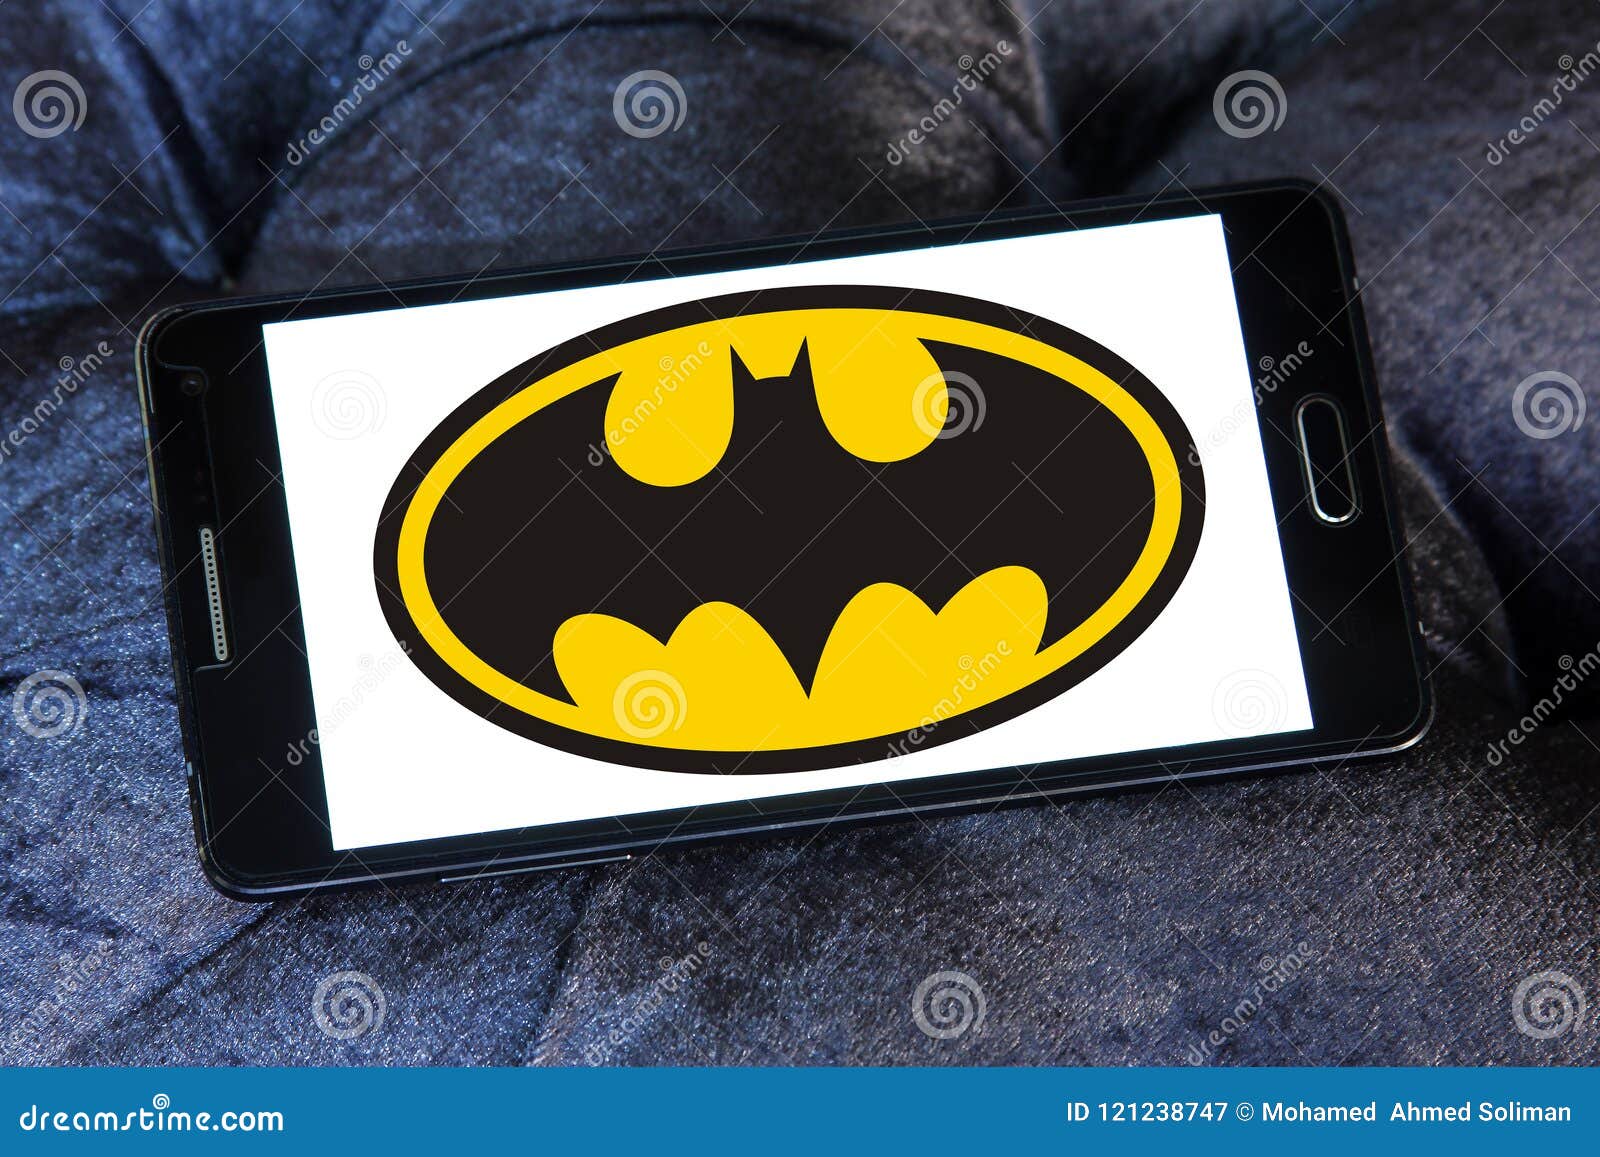 261 Batman Sign Stock Photos - Free & Royalty-Free Stock Photos